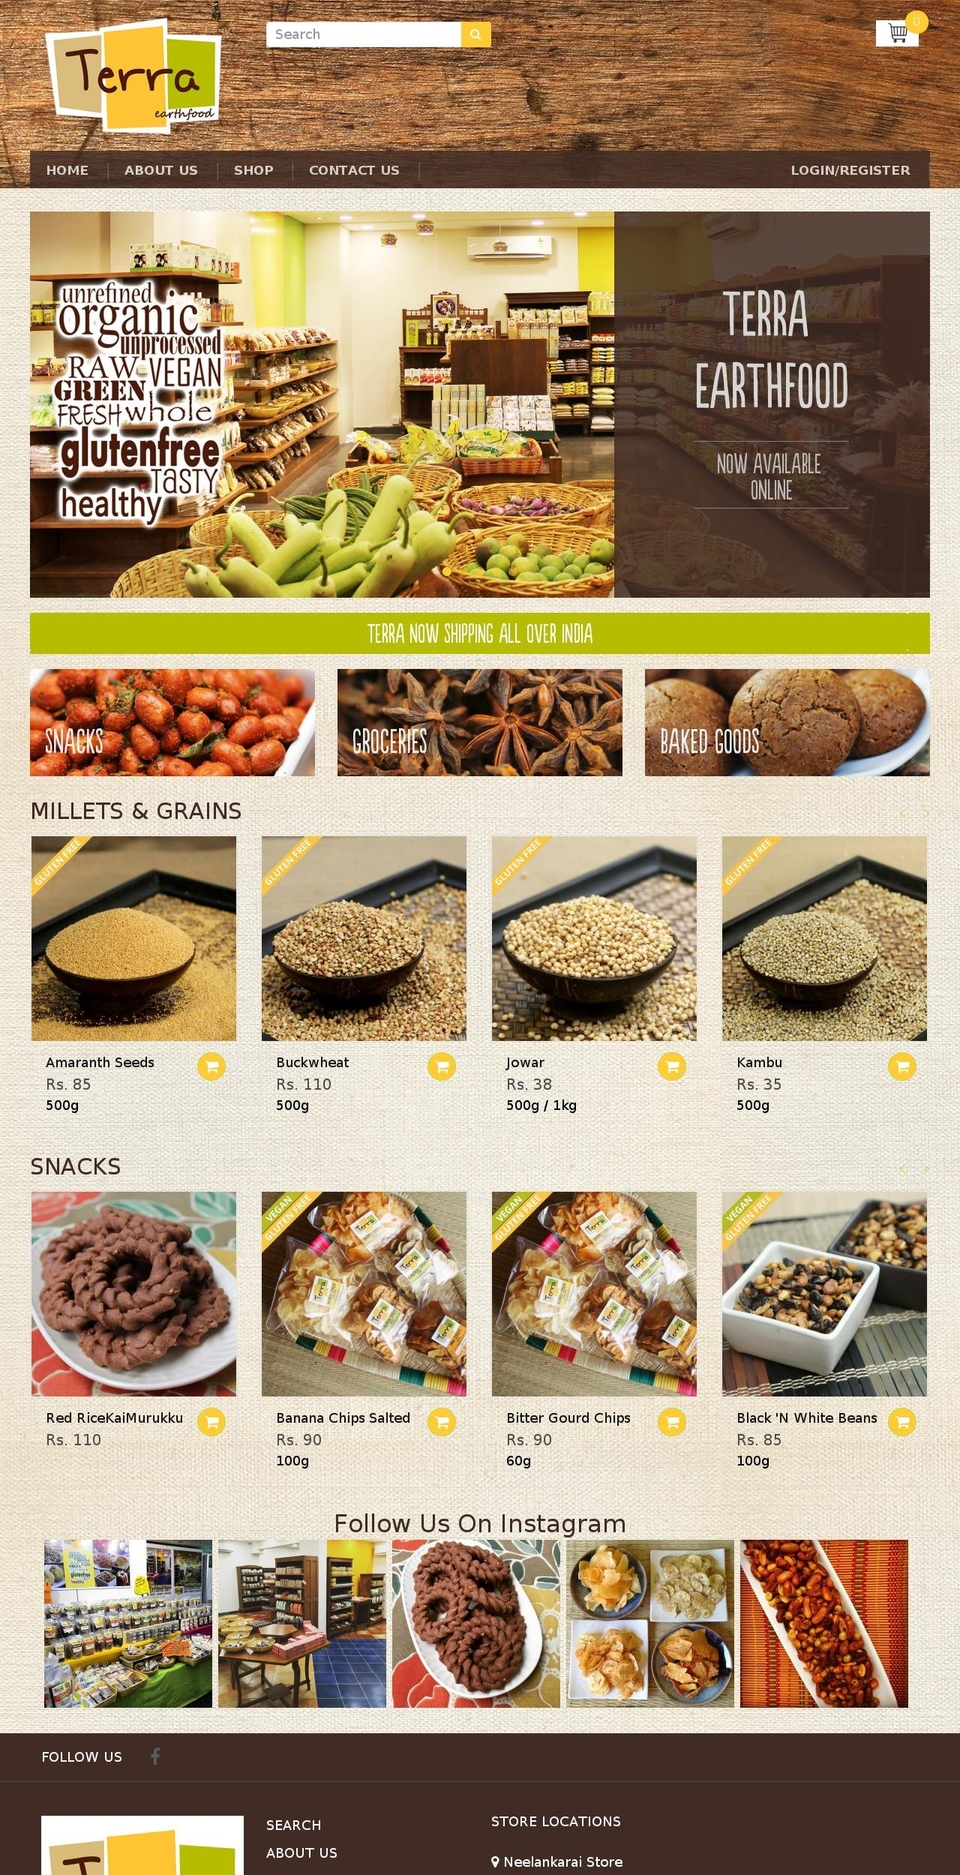 terraearthfood.com shopify website screenshot